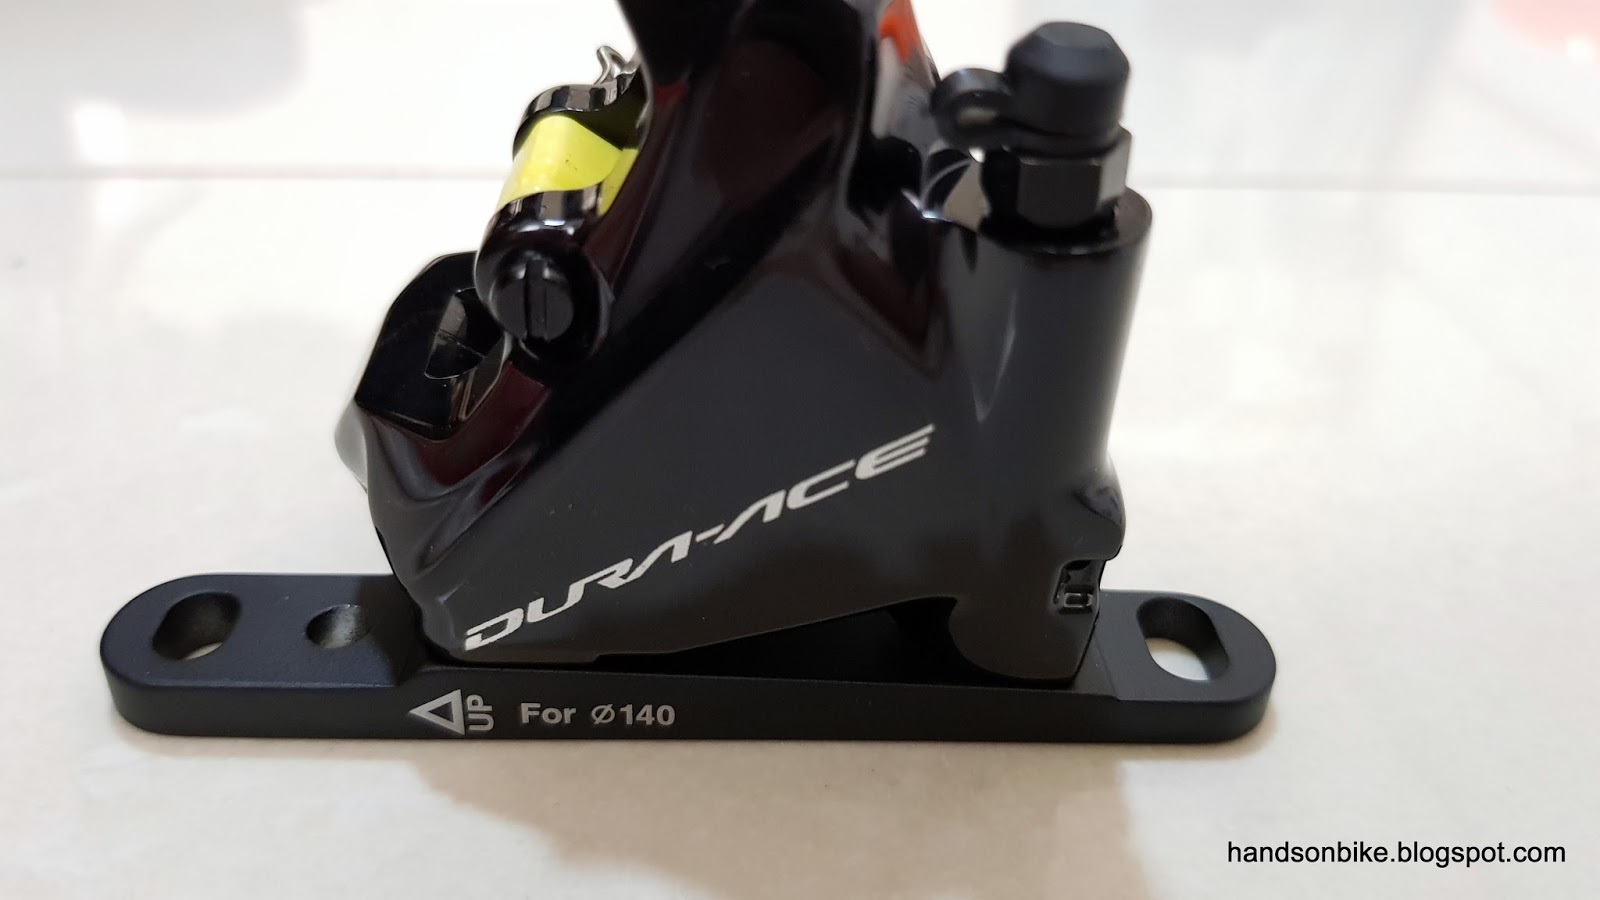 Hands On Bike: Shimano Dura-Ace R9170 vs Ultegra R8070 Hydraulic 